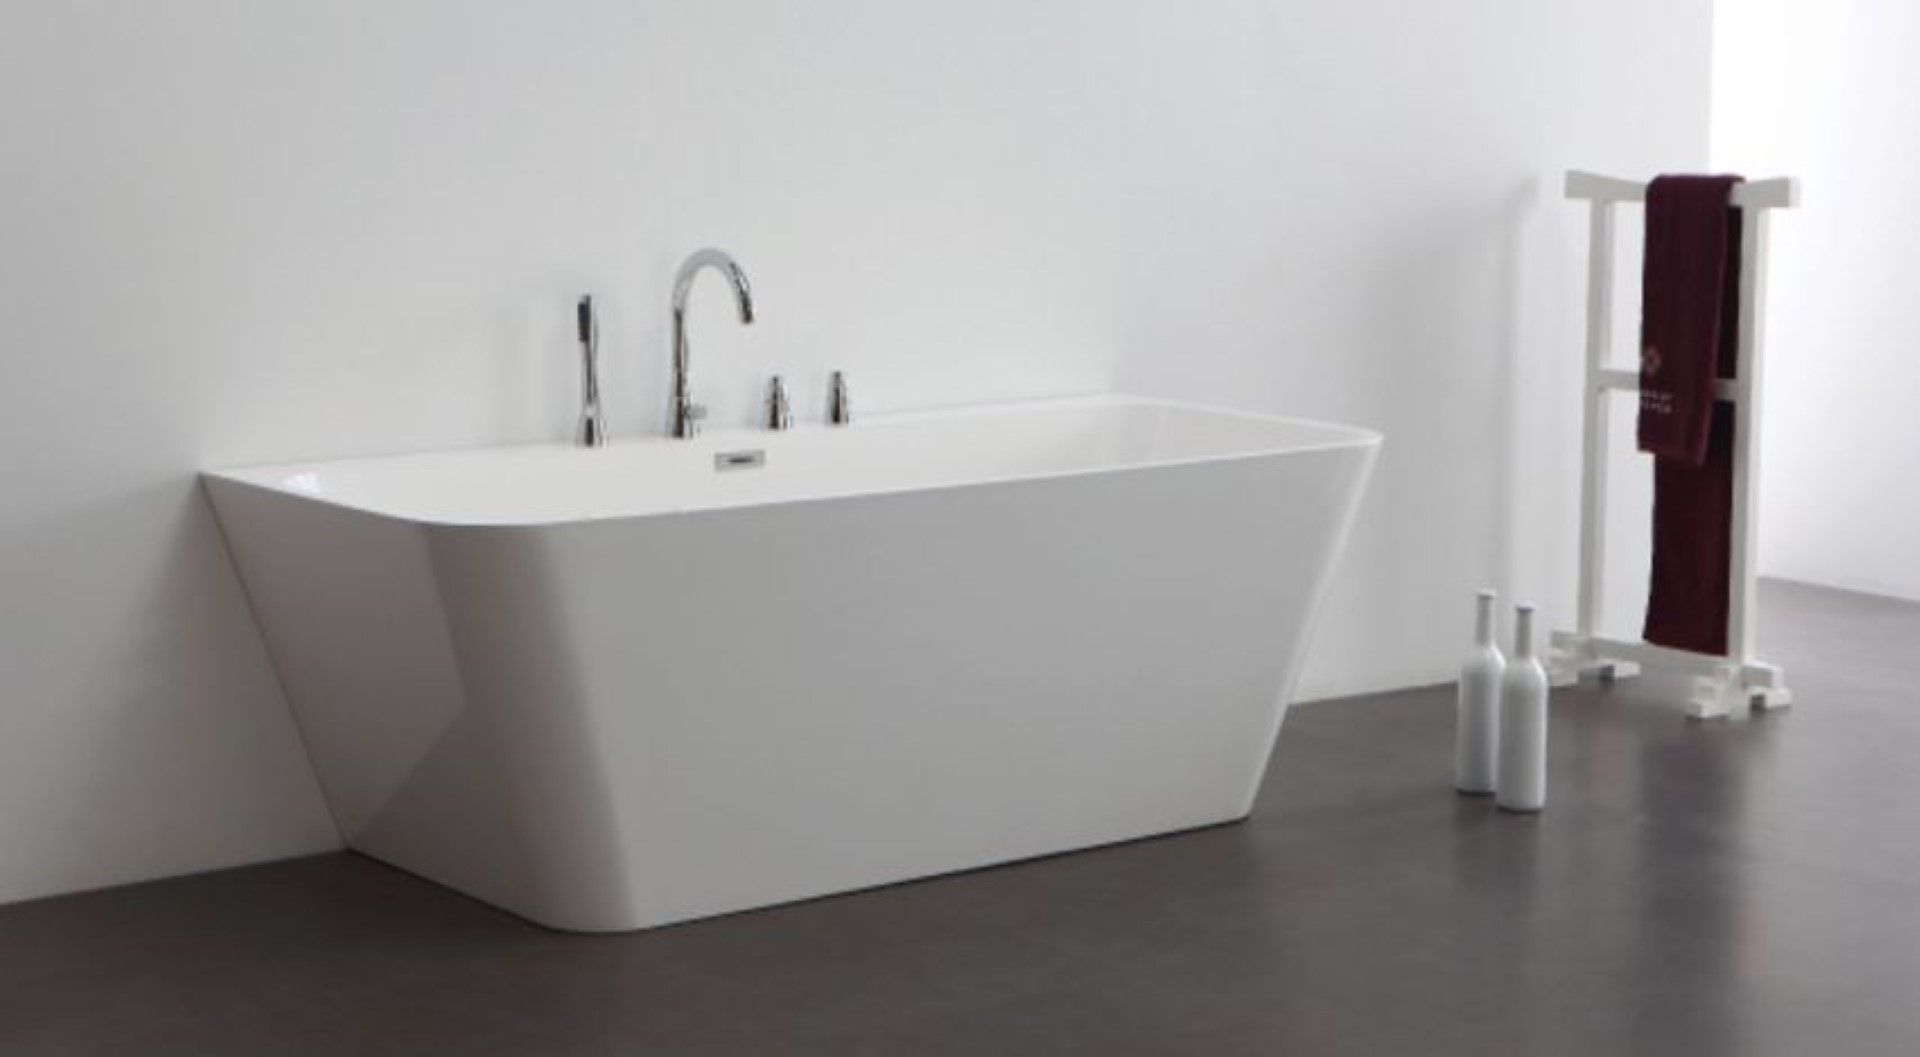 1 x MarbleTech Luxury Harmony Bath - Size: 1700 x 750 x 580 (mm) - Original RRP £2,100 - New and - Image 2 of 13